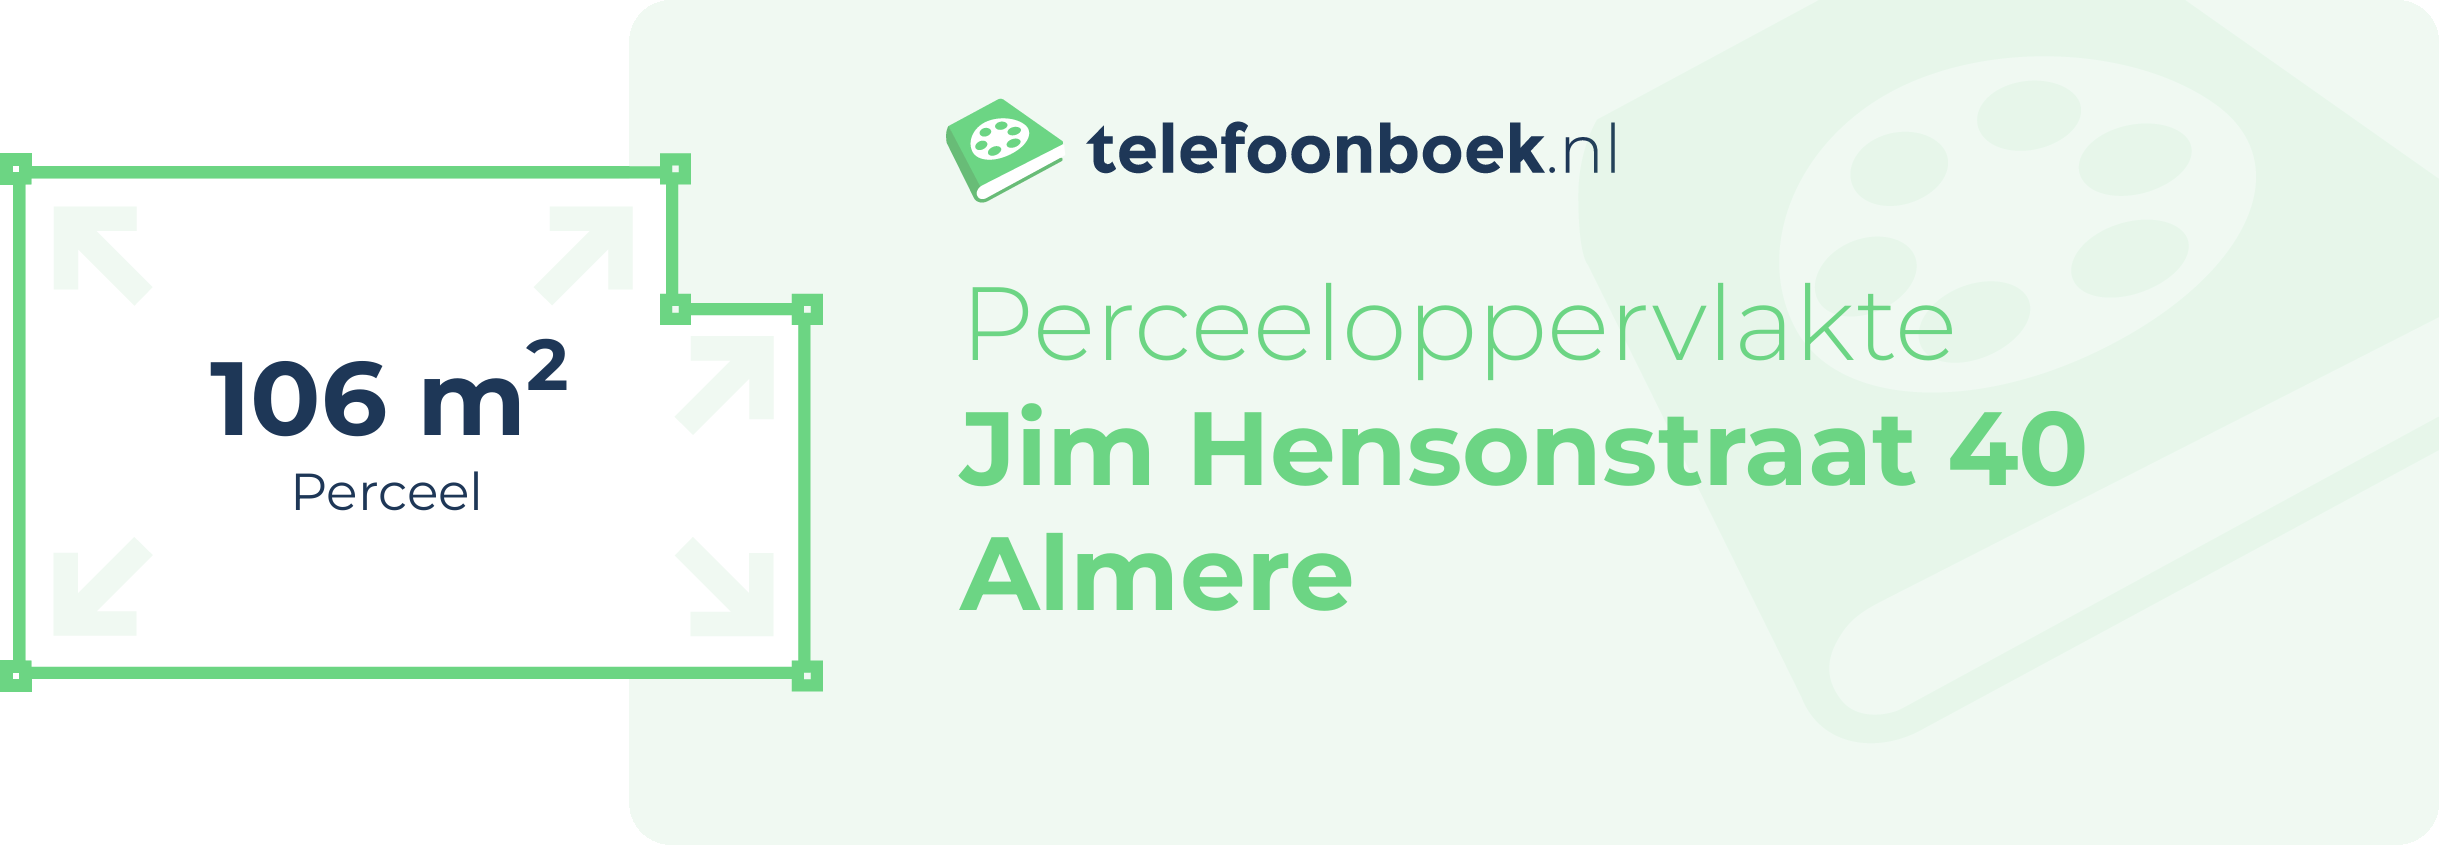 Perceeloppervlakte Jim Hensonstraat 40 Almere